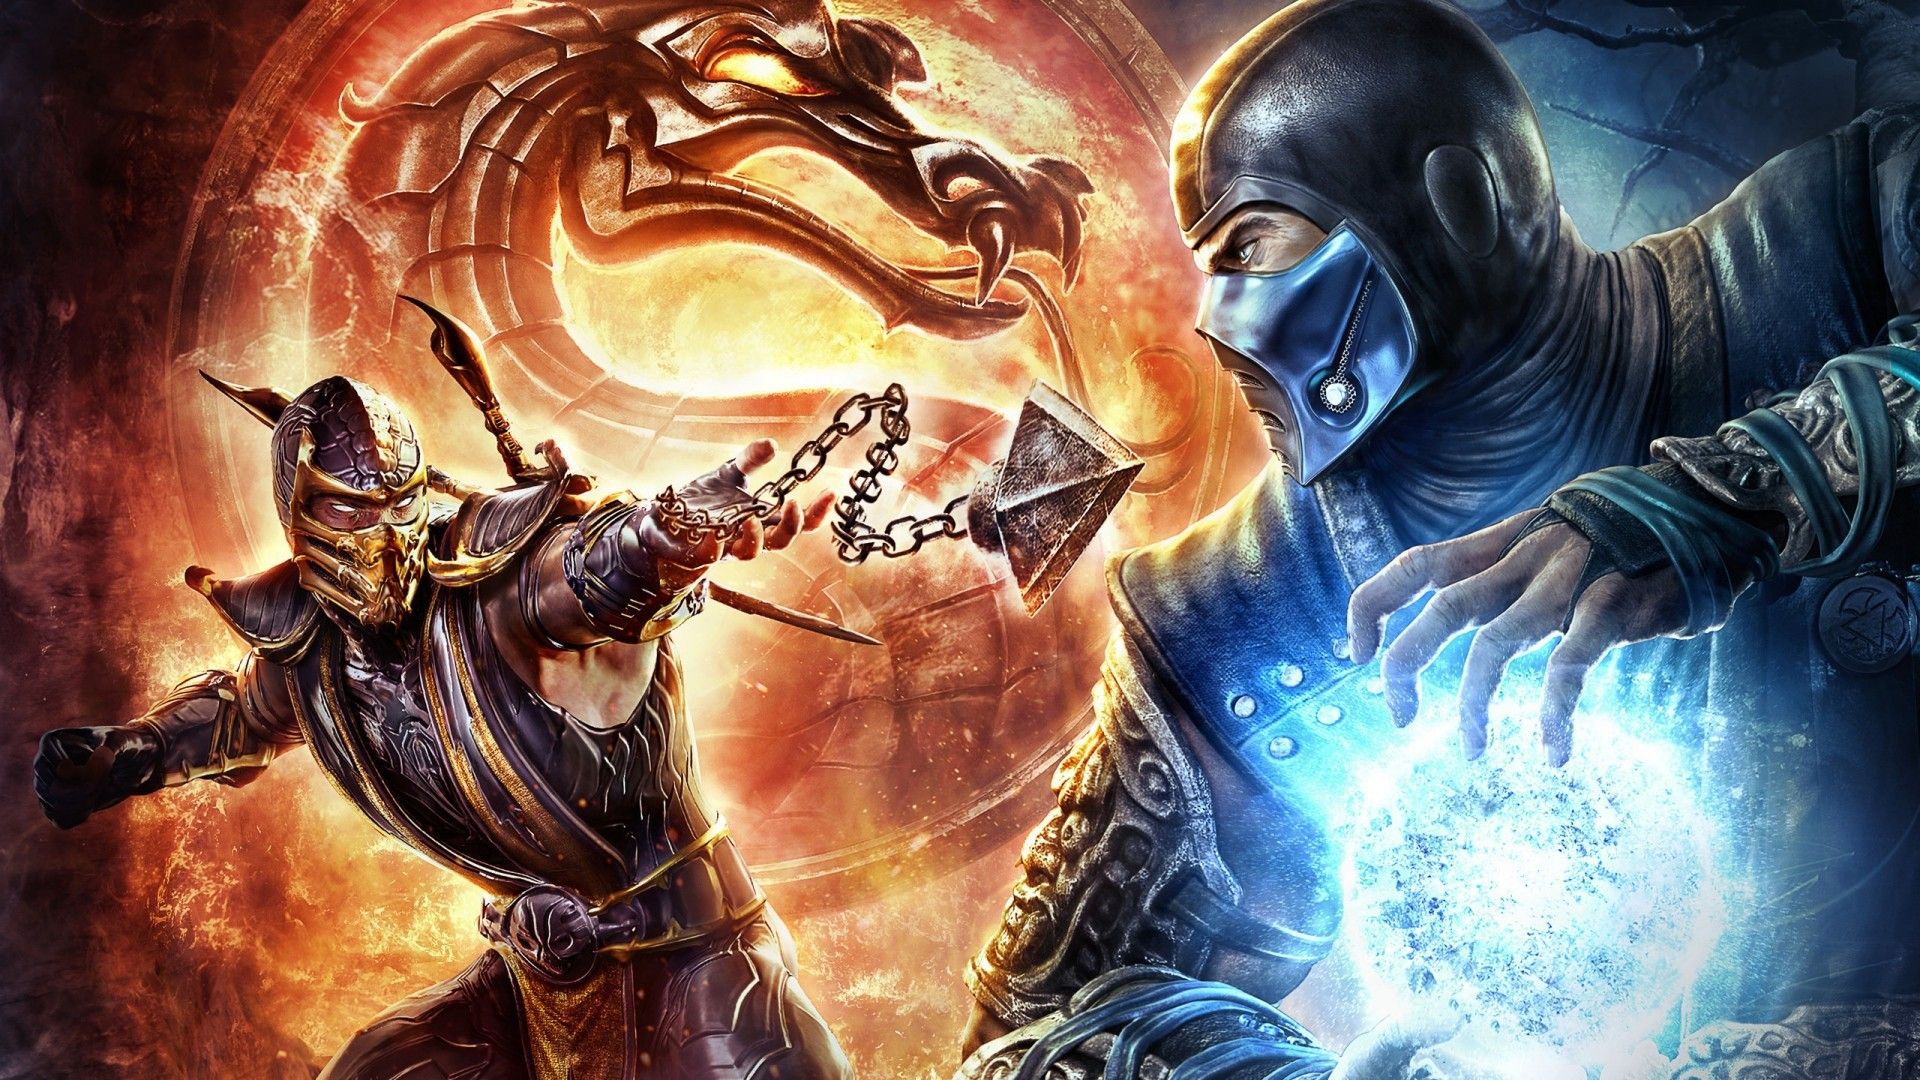 Mortal Kombat Scorpion vs Sub Zero Wallpapers